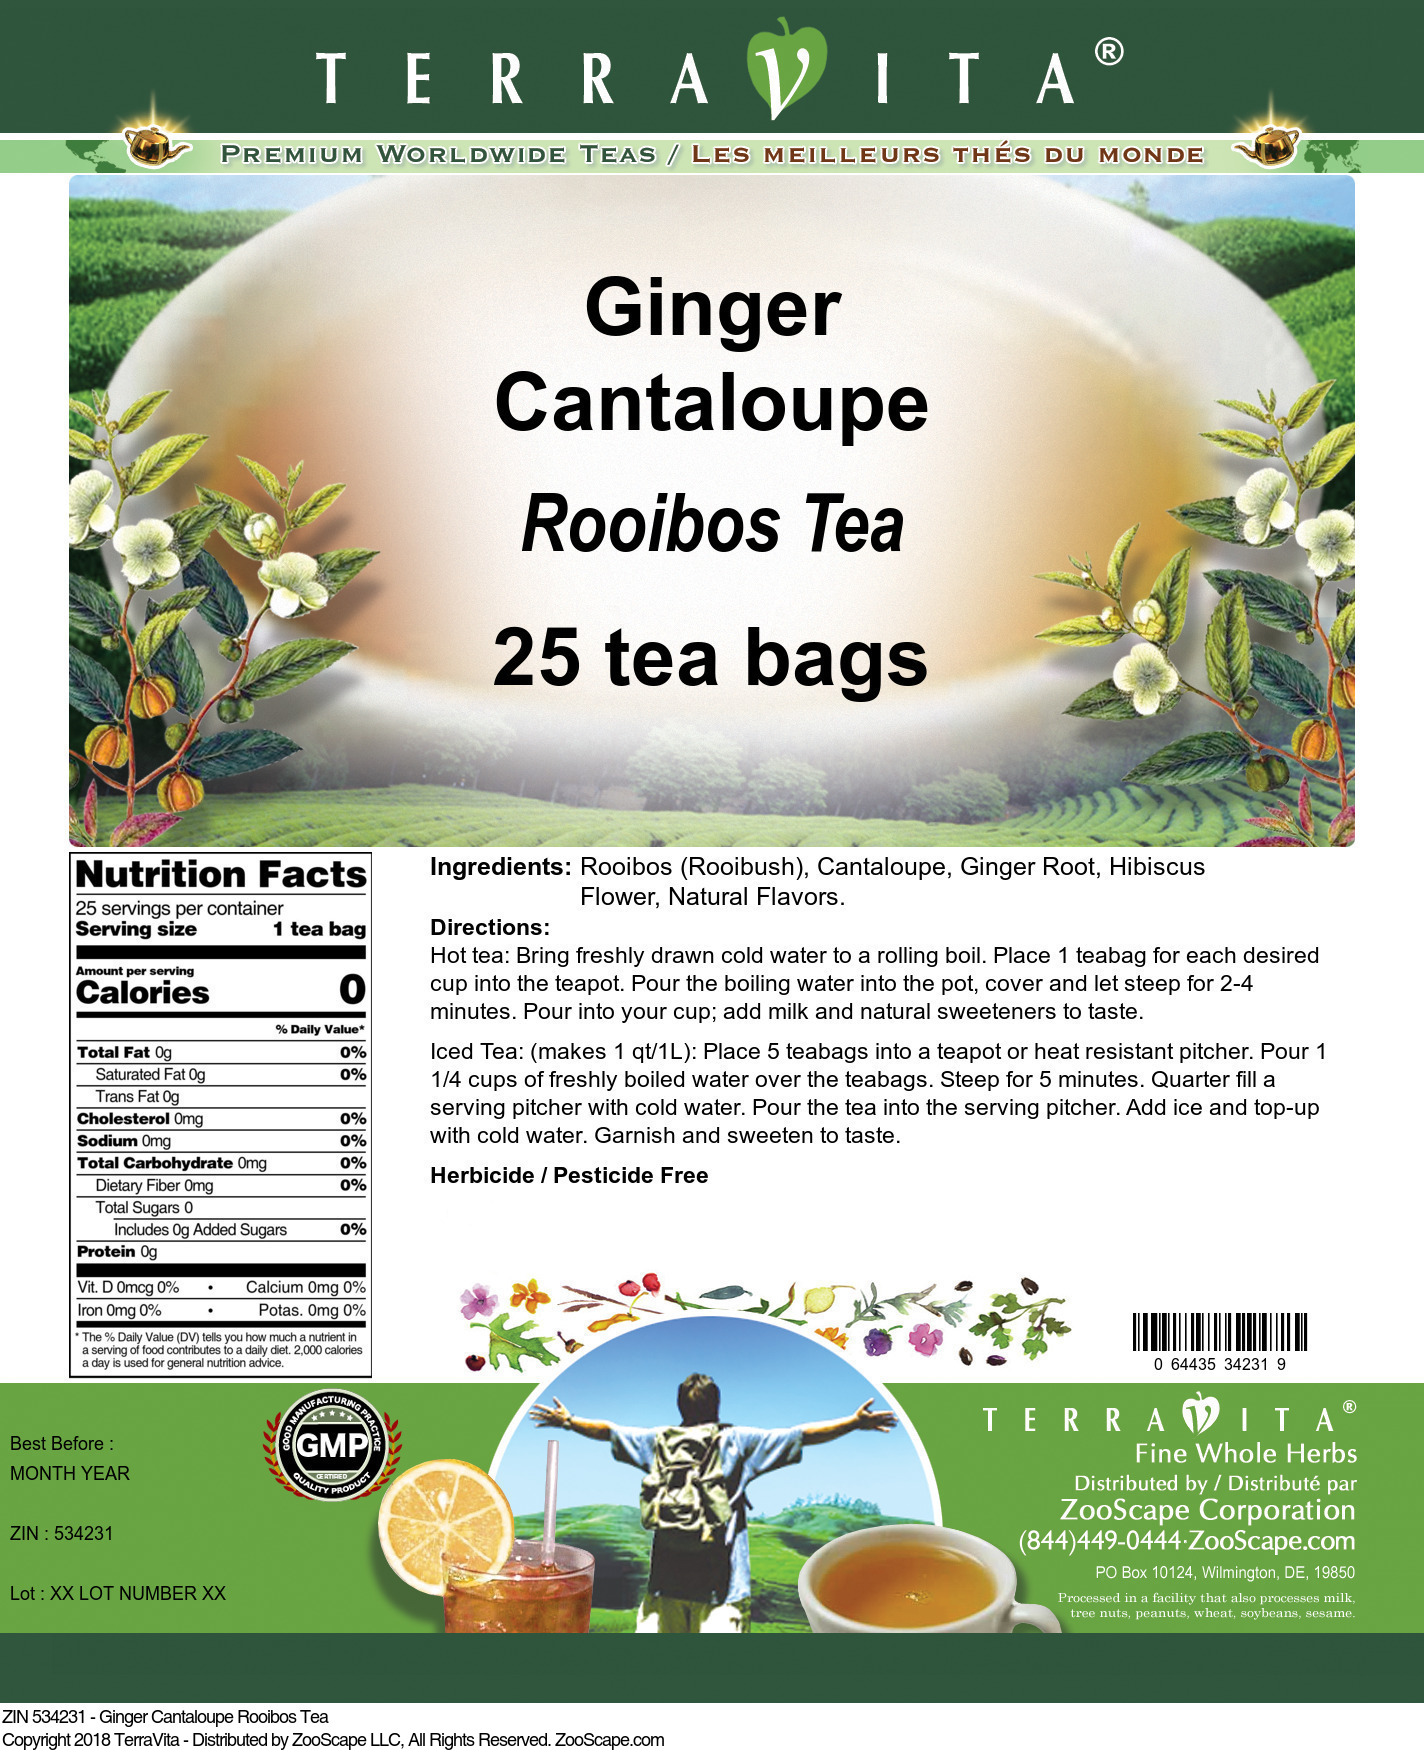 Ginger Cantaloupe Rooibos Tea - Label